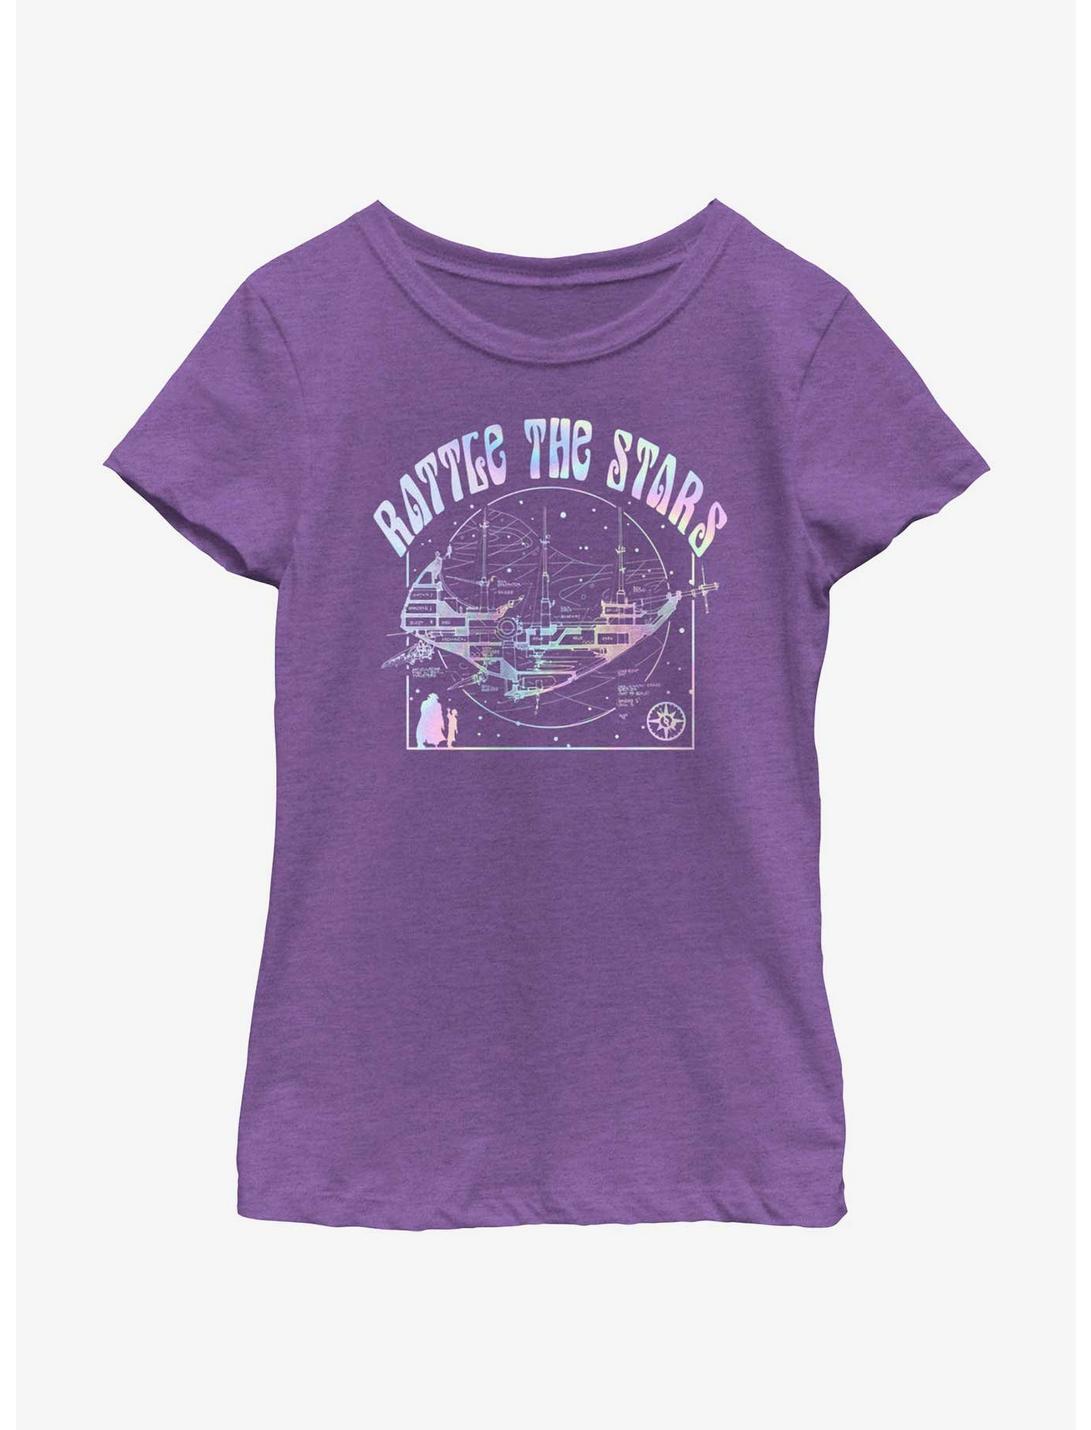 Disney Treasure Planet Rattle The Stars Argentum Ship Schematics Youth Girls T-Shirt, PURPLE BERRY, hi-res